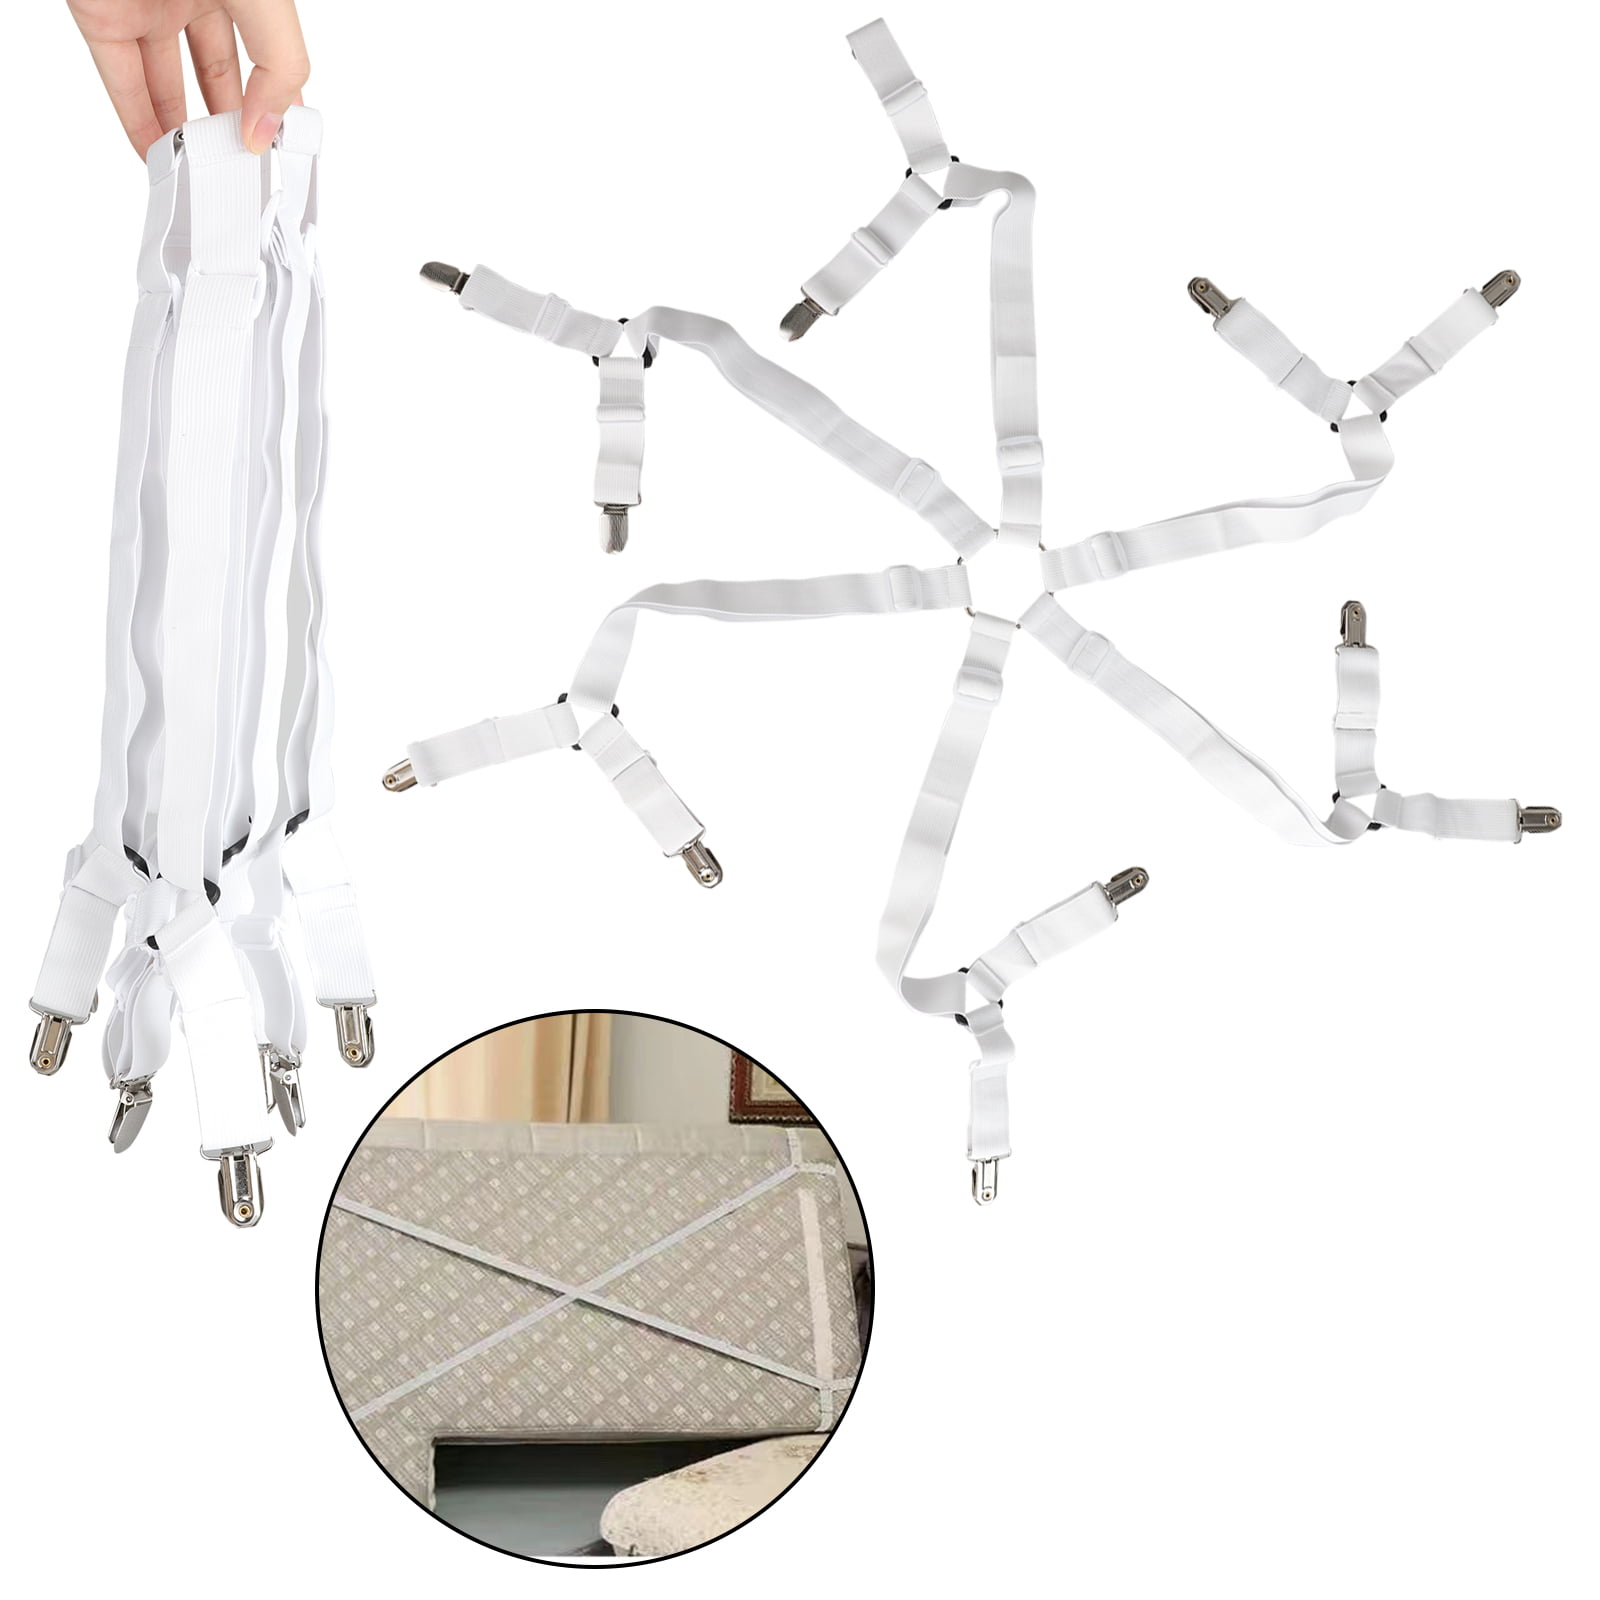 6 Sides Crisscross Bed Fitted Sheet Straps Suspender Gripper Fastener Clip 3-Way 